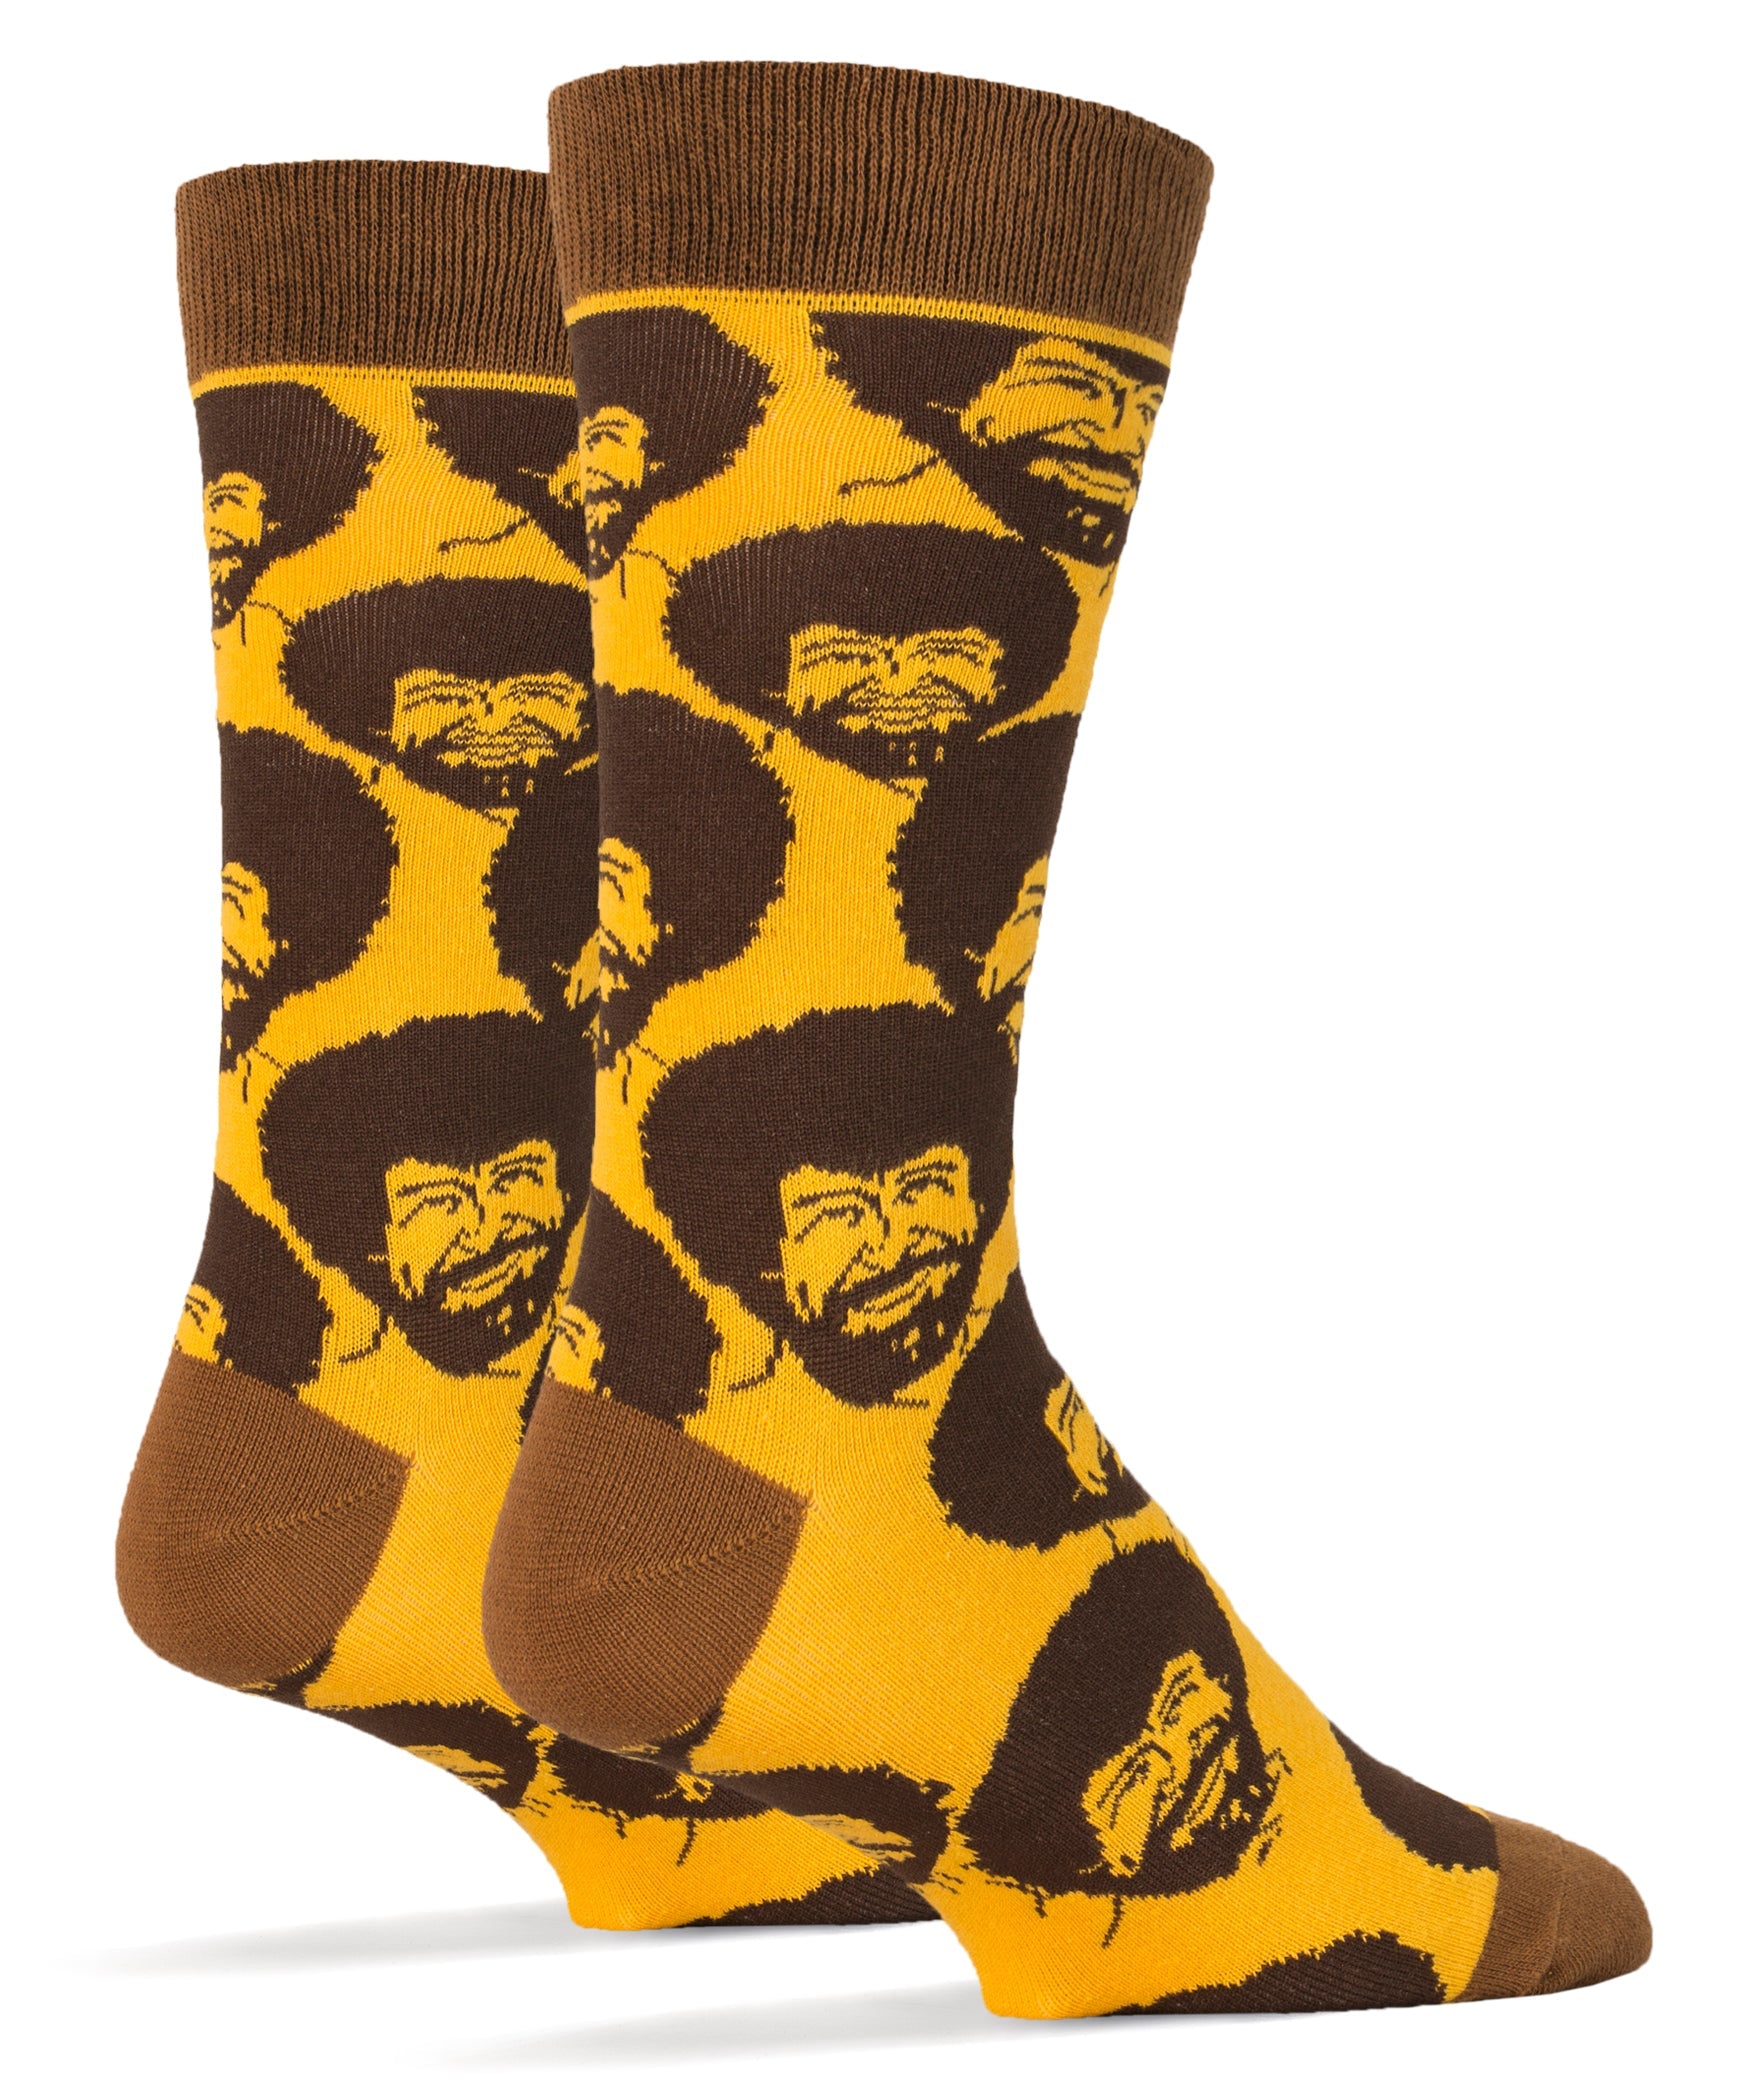 Yellow Mens Dress Socks / Golden Yellow Men Casual Cotton Socks, Solid  Formal Adult Crew Socks, Wedding Groom Groomsmen Gift, Colorful Socks 